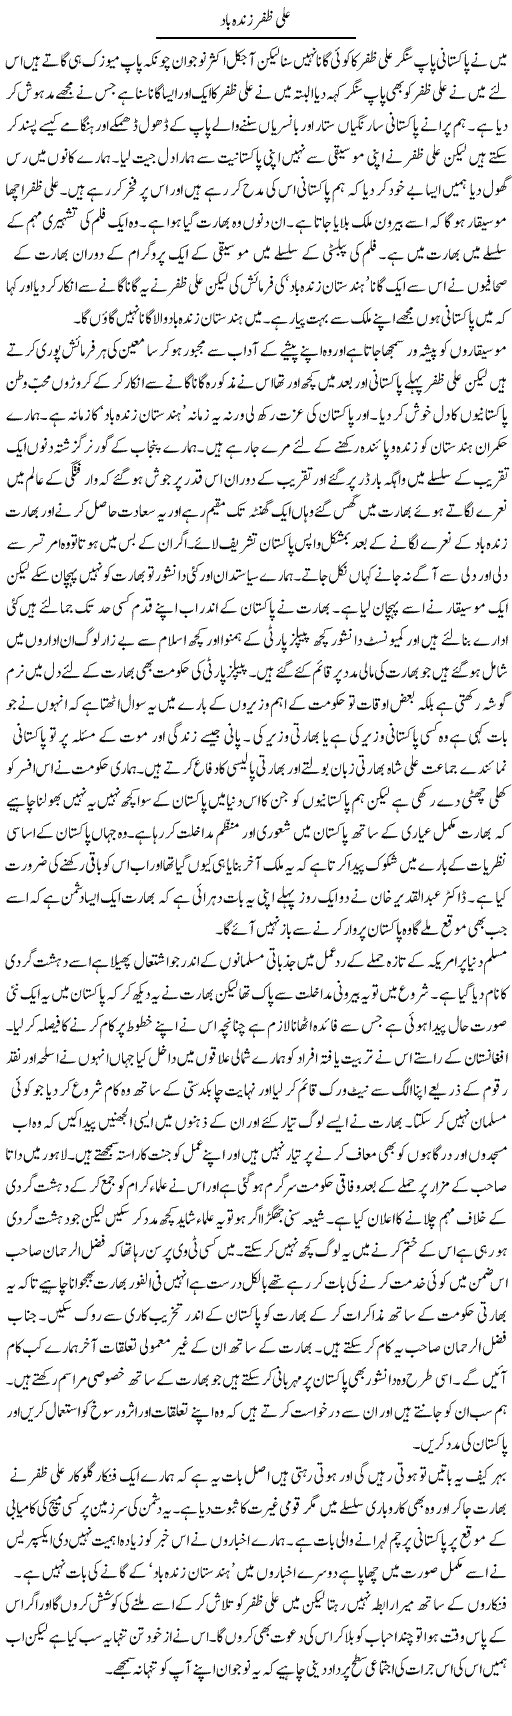 Ali Zafar Zindabad Express Column Abdul Qadir Hasan 6 July 2010